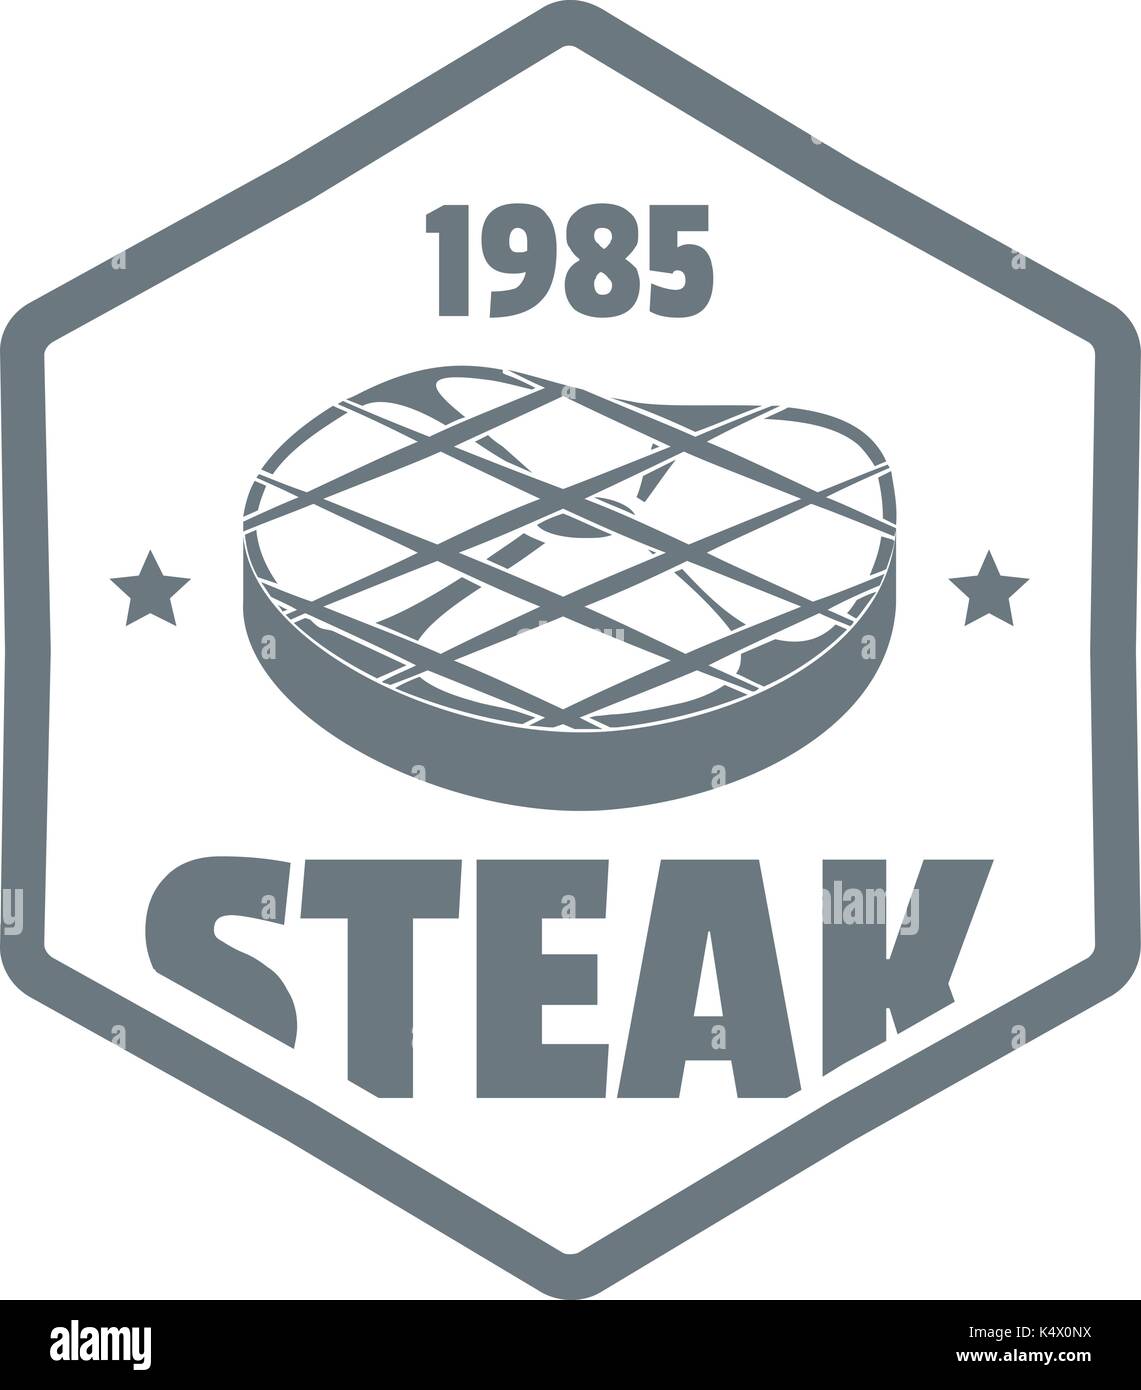 1985 steak logo, simple style Stock Vector